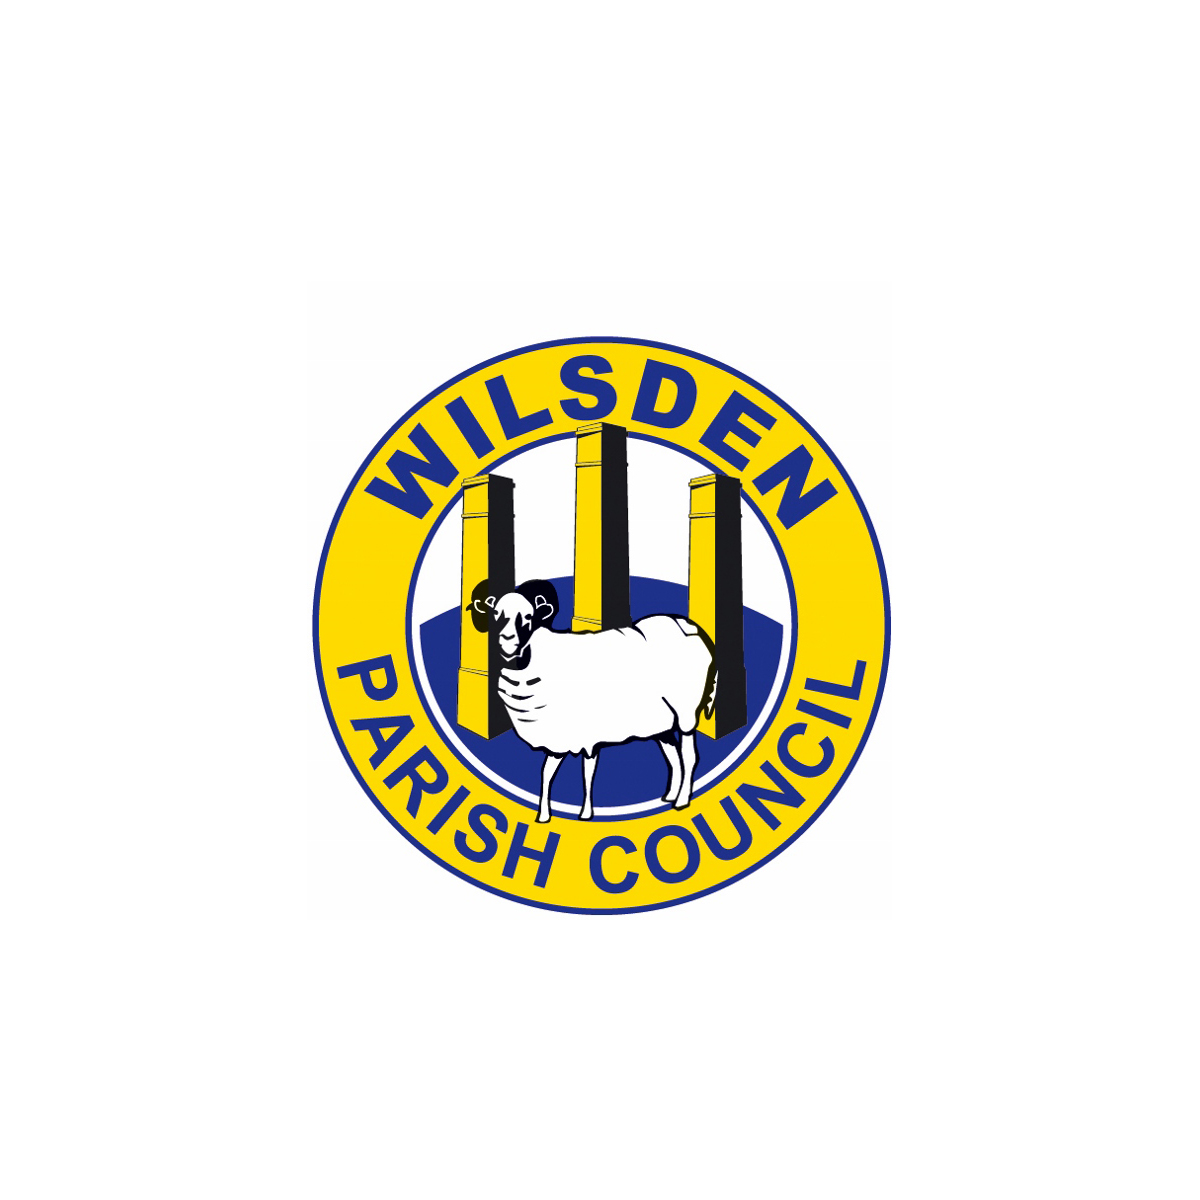 Wilsden Parish Council logo